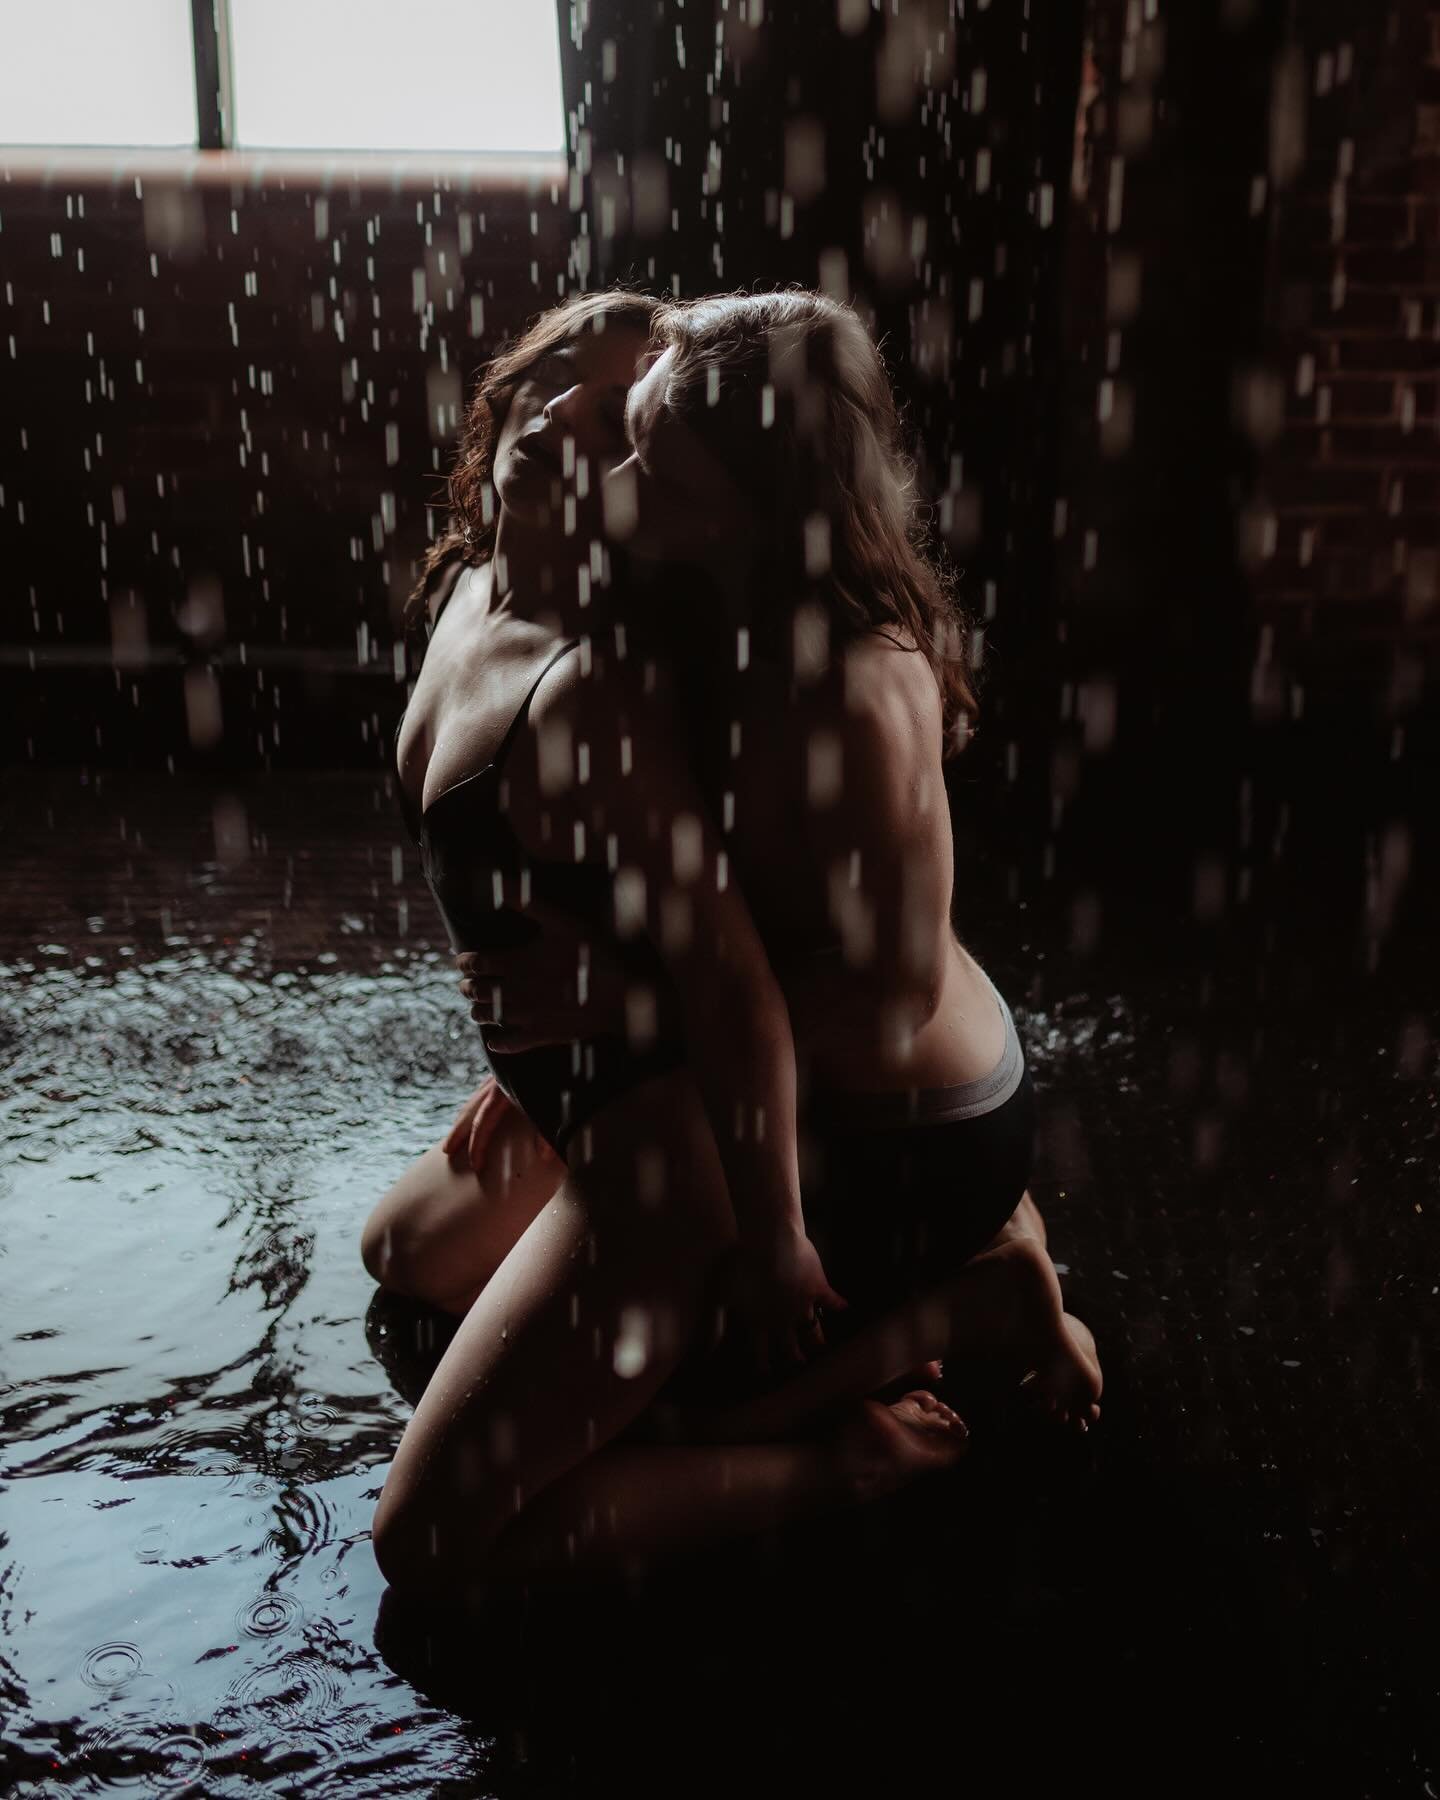 I need more couples in the rain room #rainroom #couplegoals #couplephotography #cutecouples #couplephotoshoot #rainroom #rainroomohio